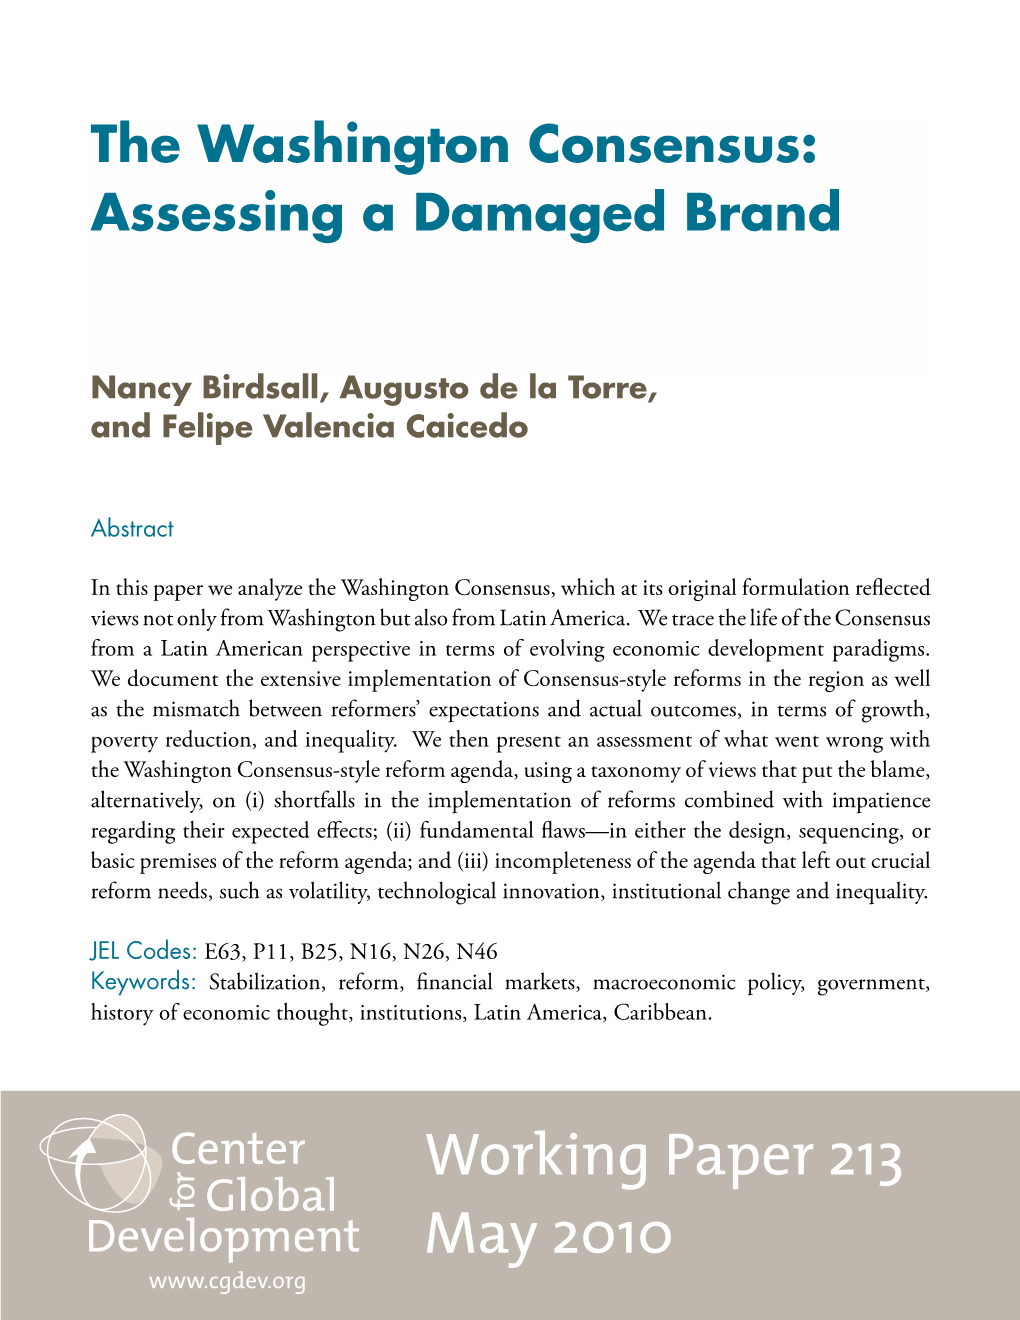 The Washington Consensus: Assessing a Damaged Brand